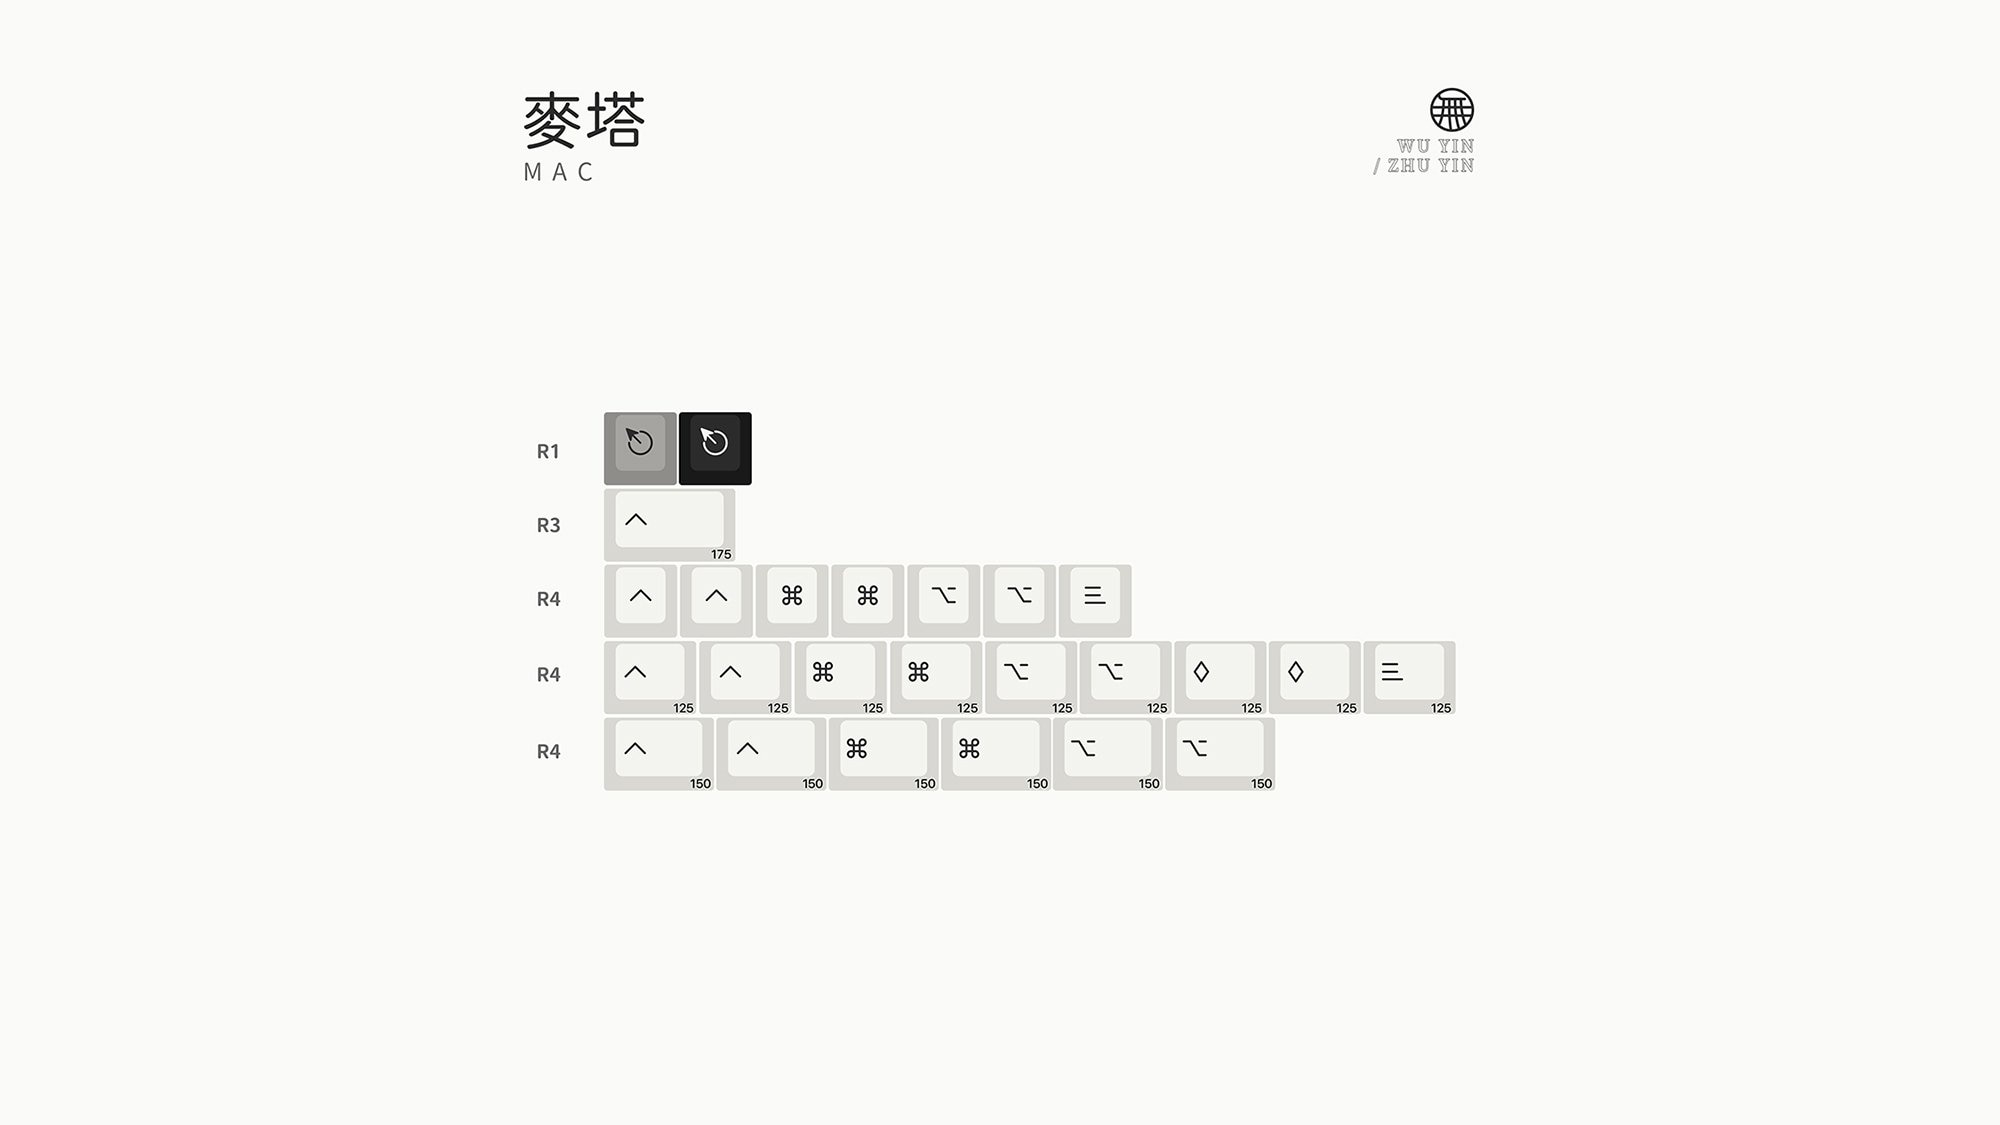 [Restock] EPBT "WUYINZHUYIN" Extra Kit (Except Base Kit) Cherry Profile Dye-sub Keycaps For Mechanical Keyboard